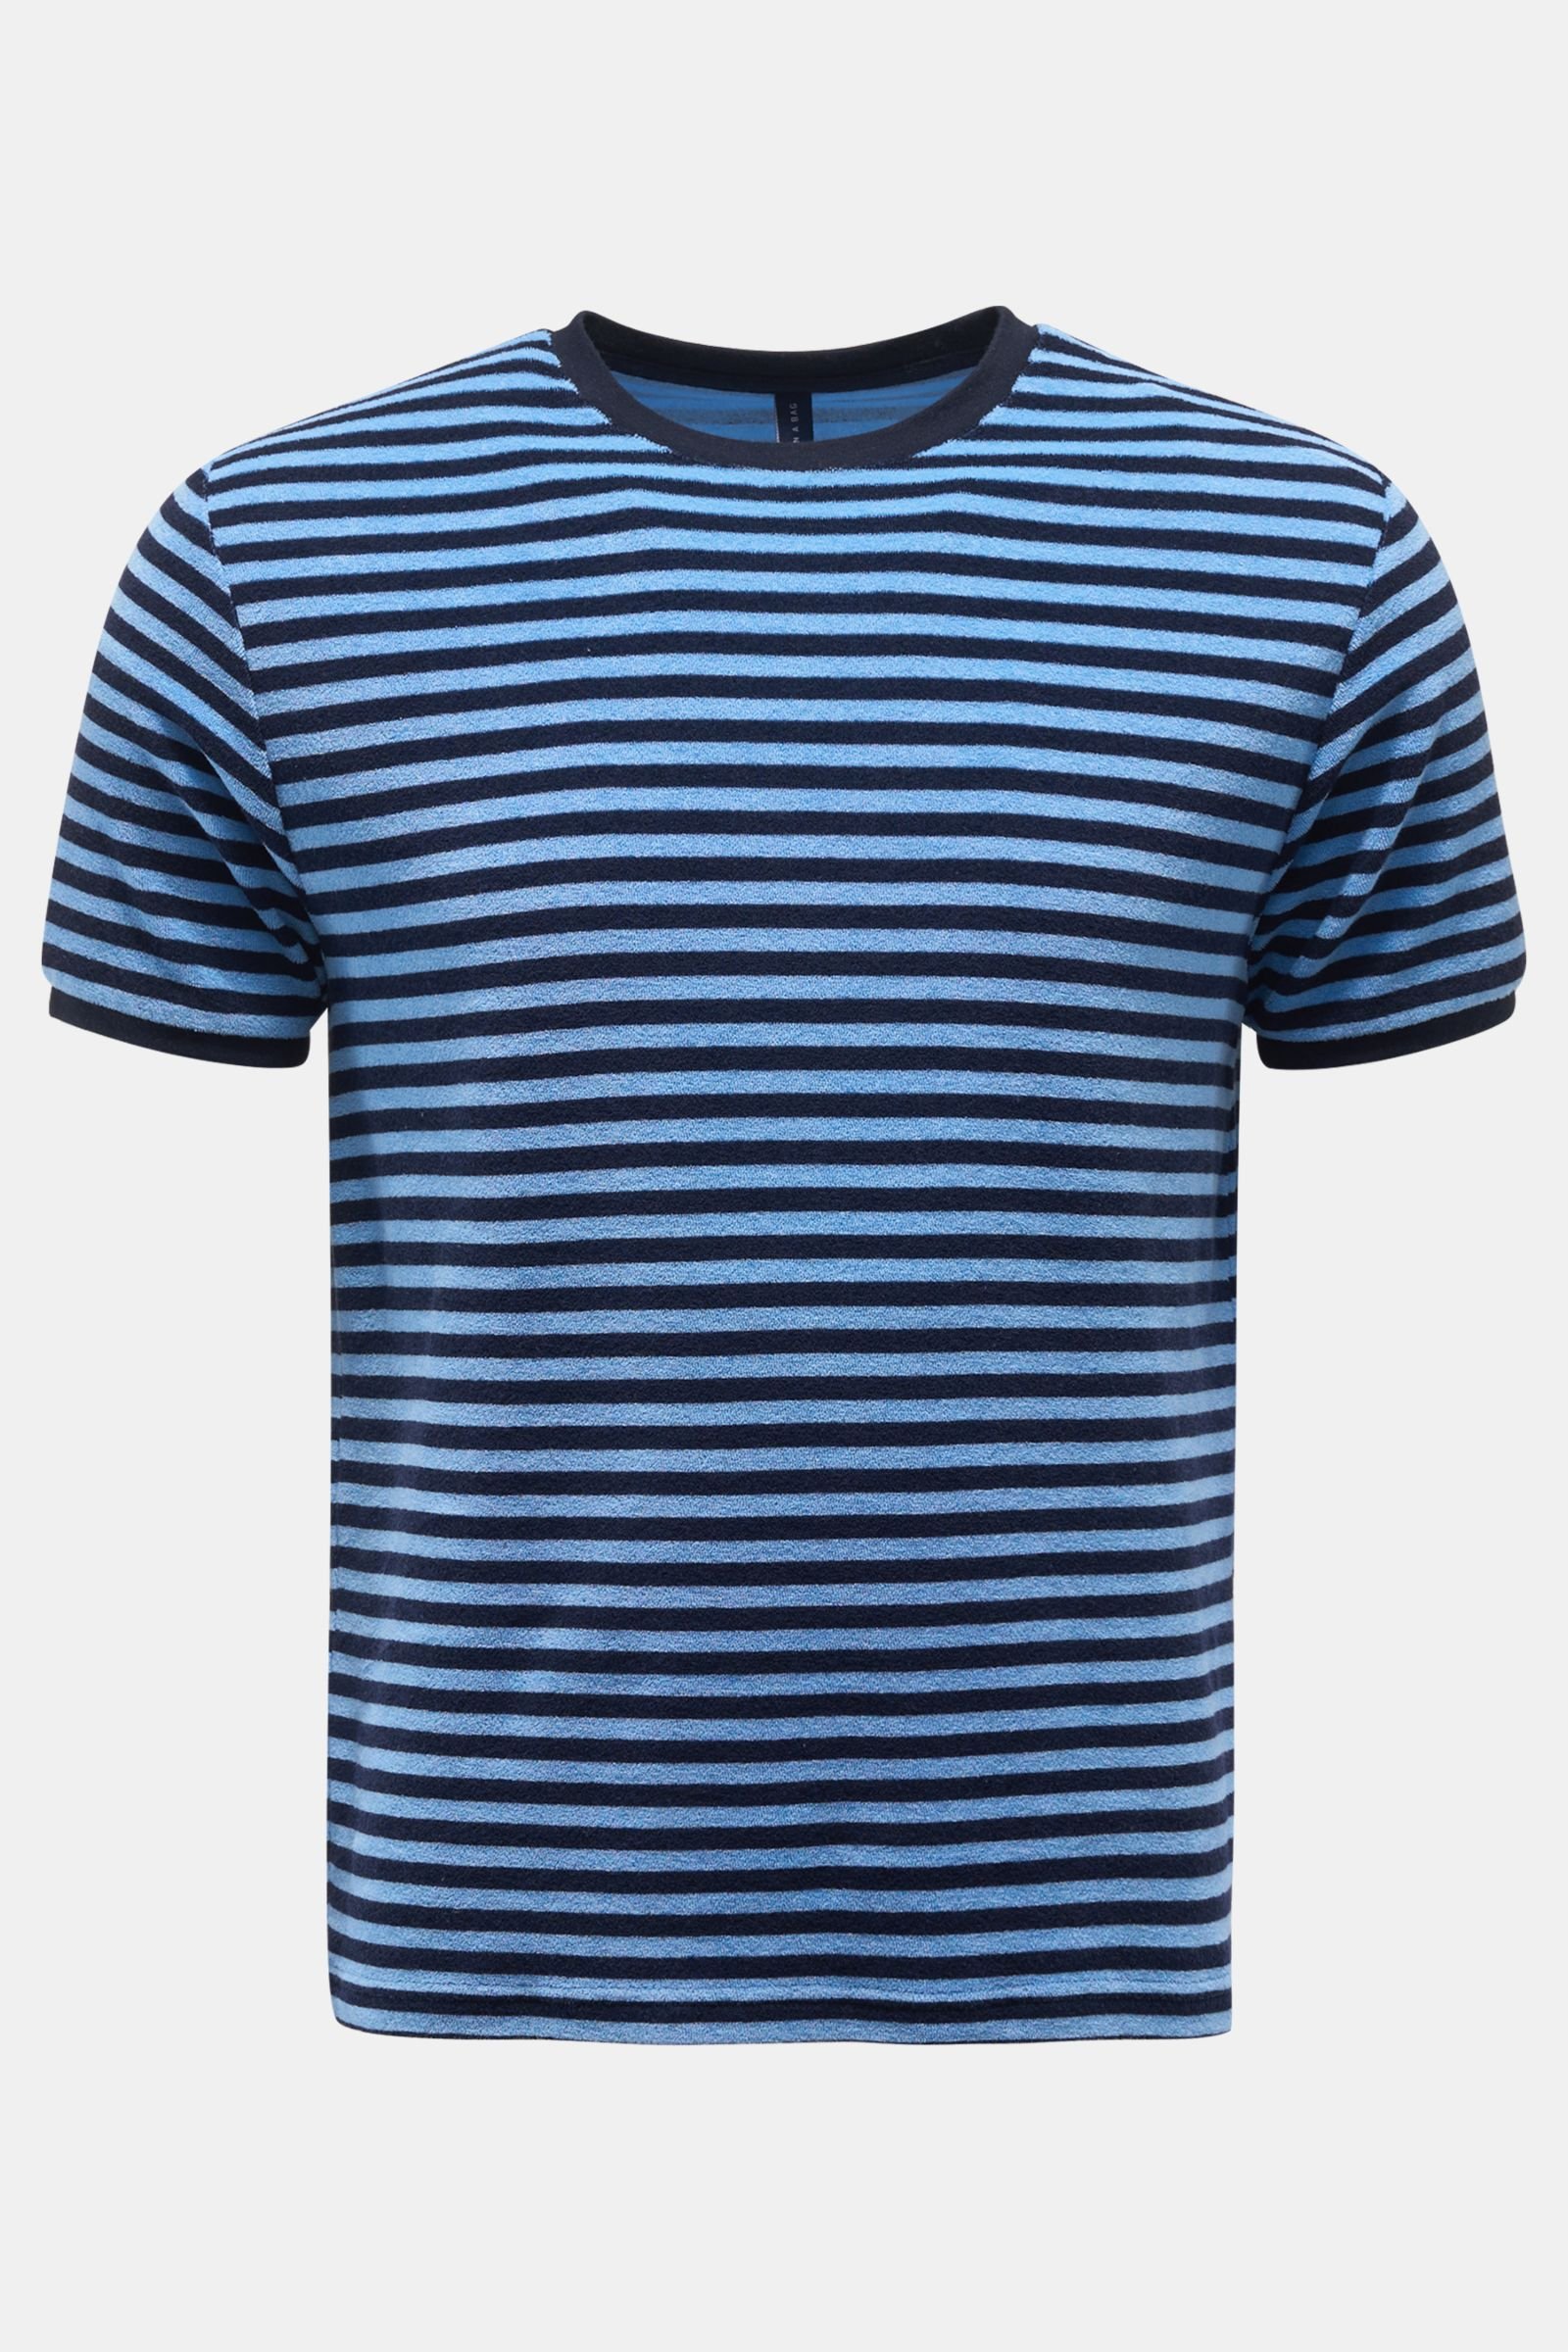 Terrycloth crew neck T-shirt 'Terry Stripe Tee' light blue/black striped